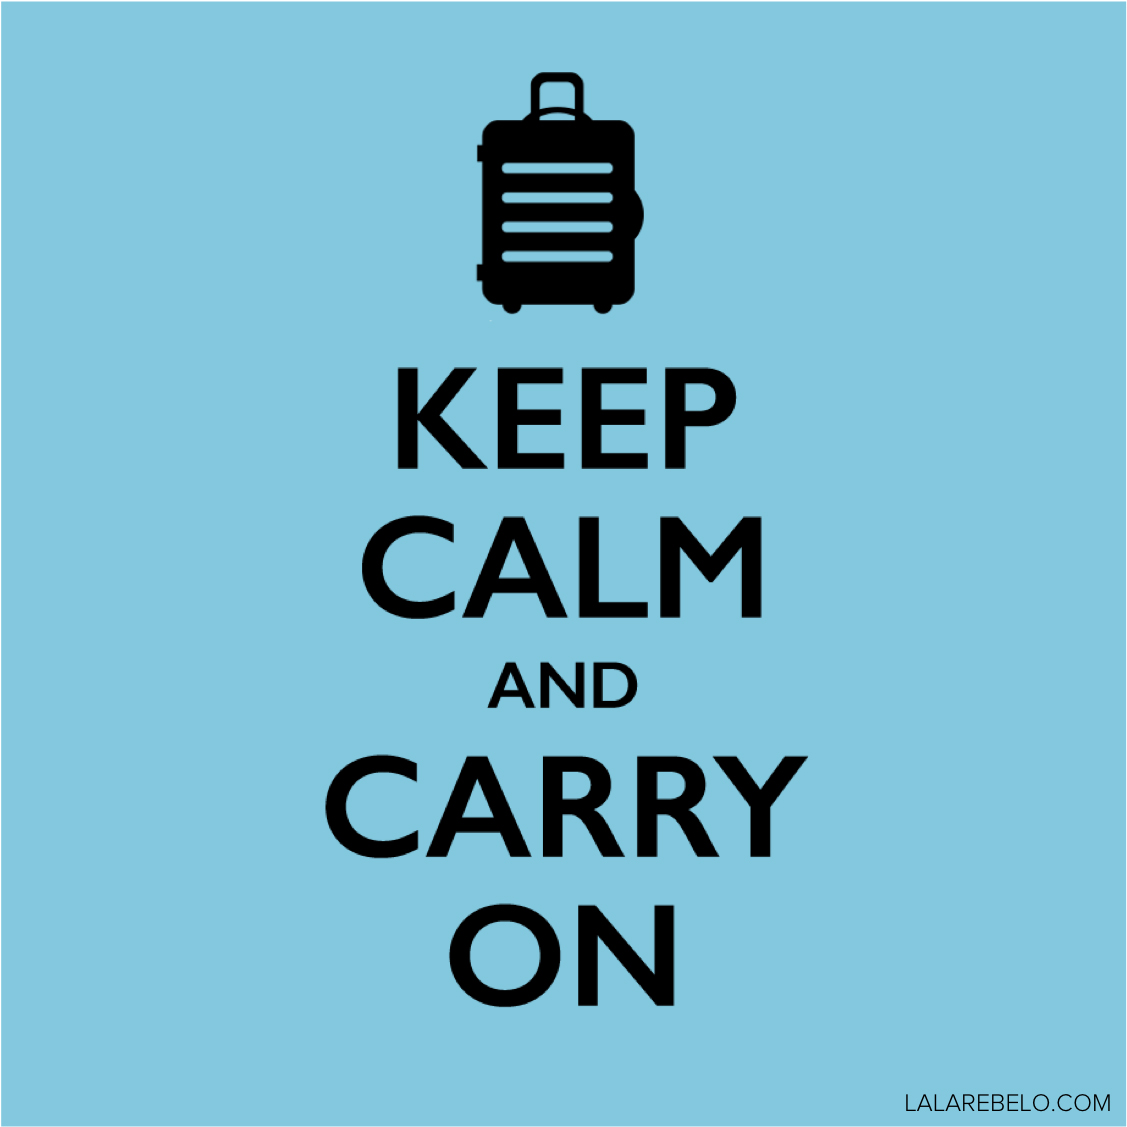 keep-calm-carry-on-lalarebelo-copia